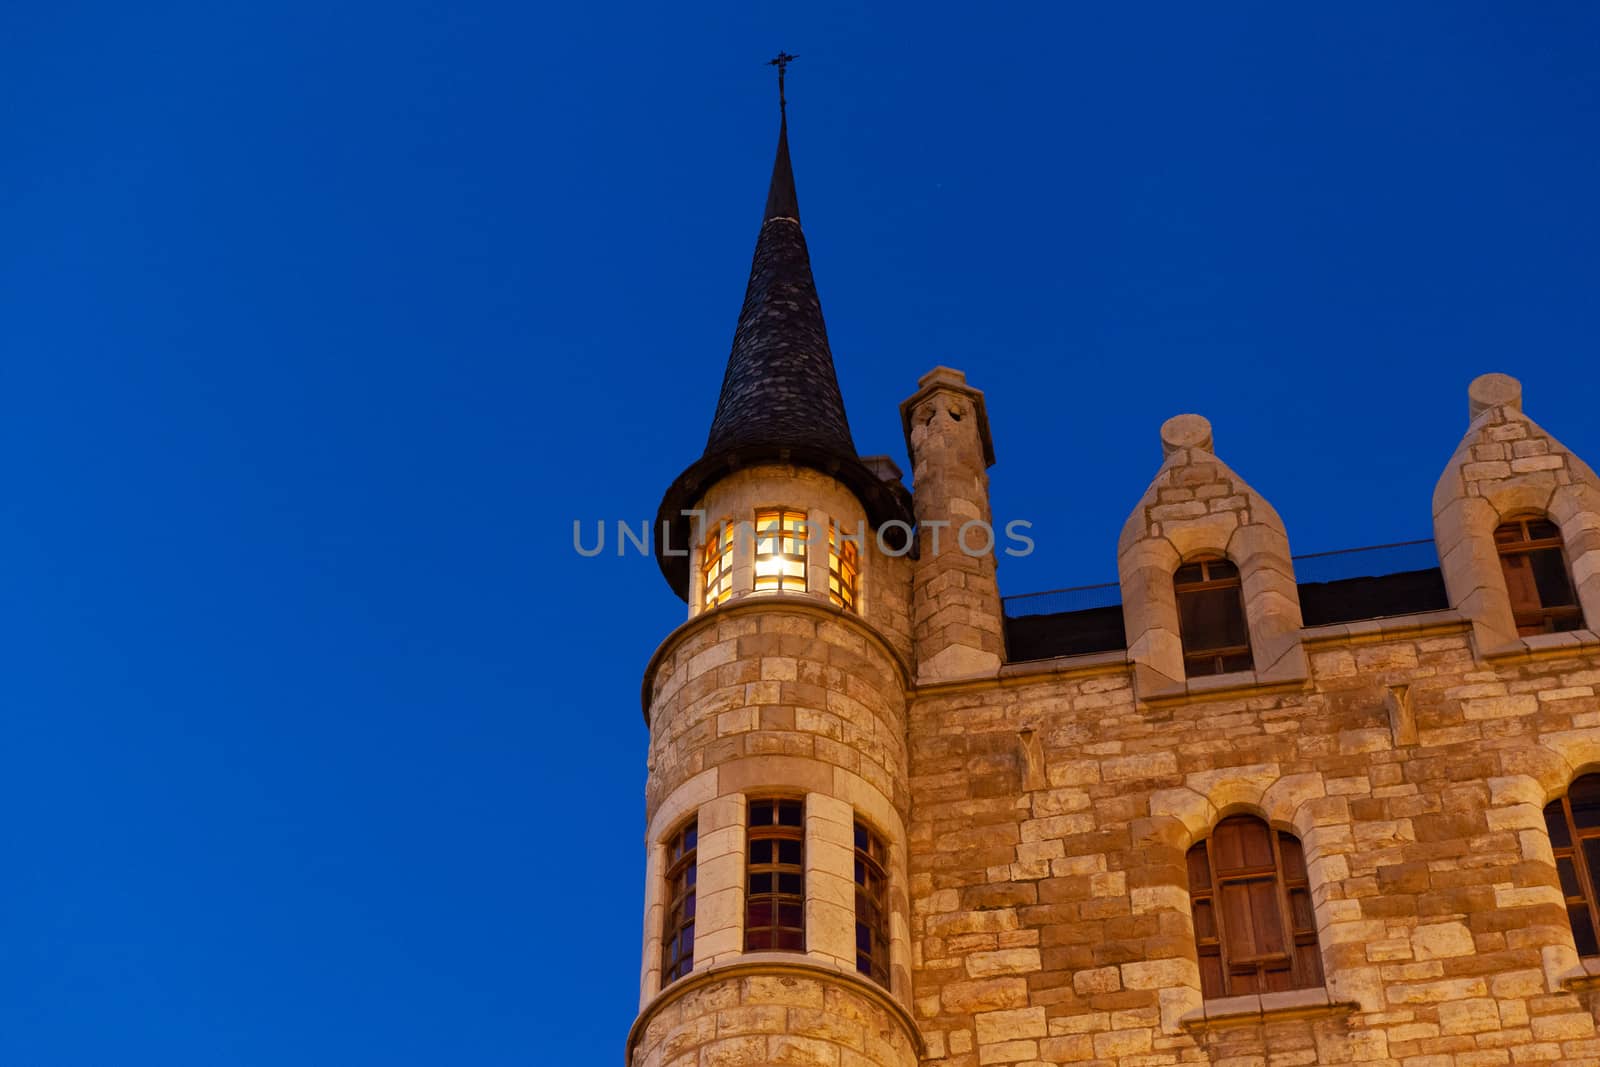 Leon, Spain - 9 December 2019: Tower of Casa Botines